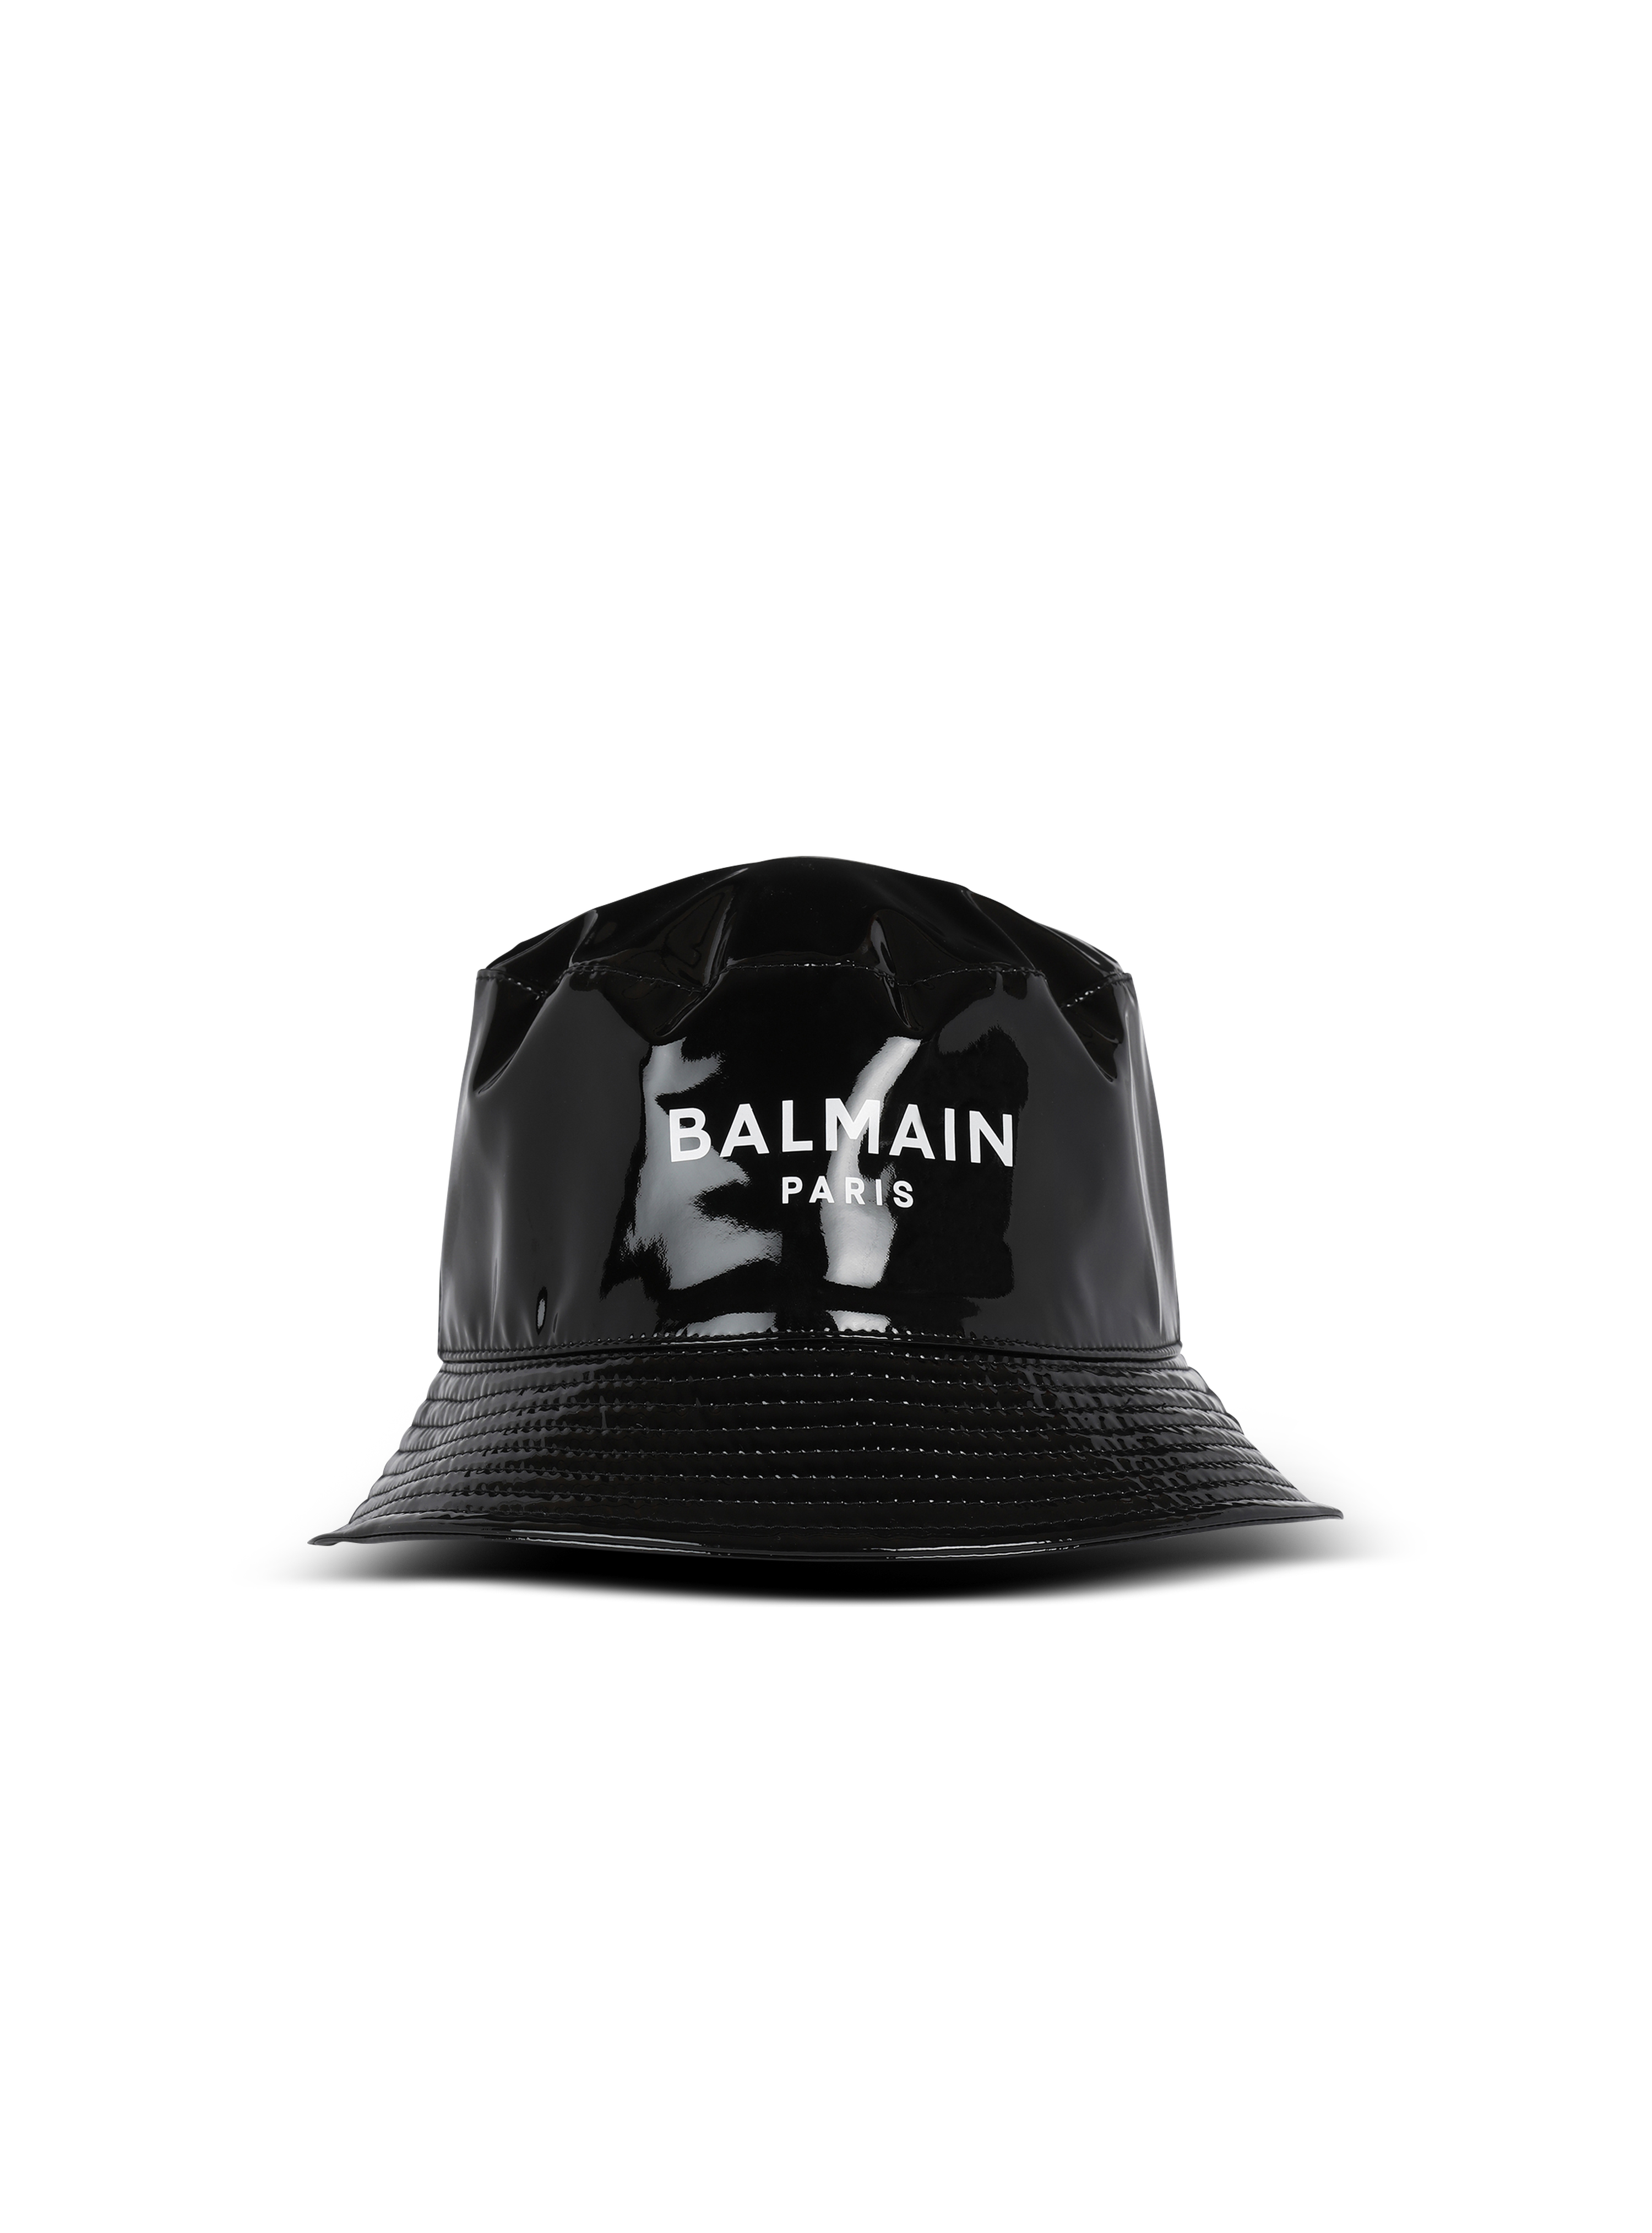 Vinyl bucket hat with Balmain logo, black